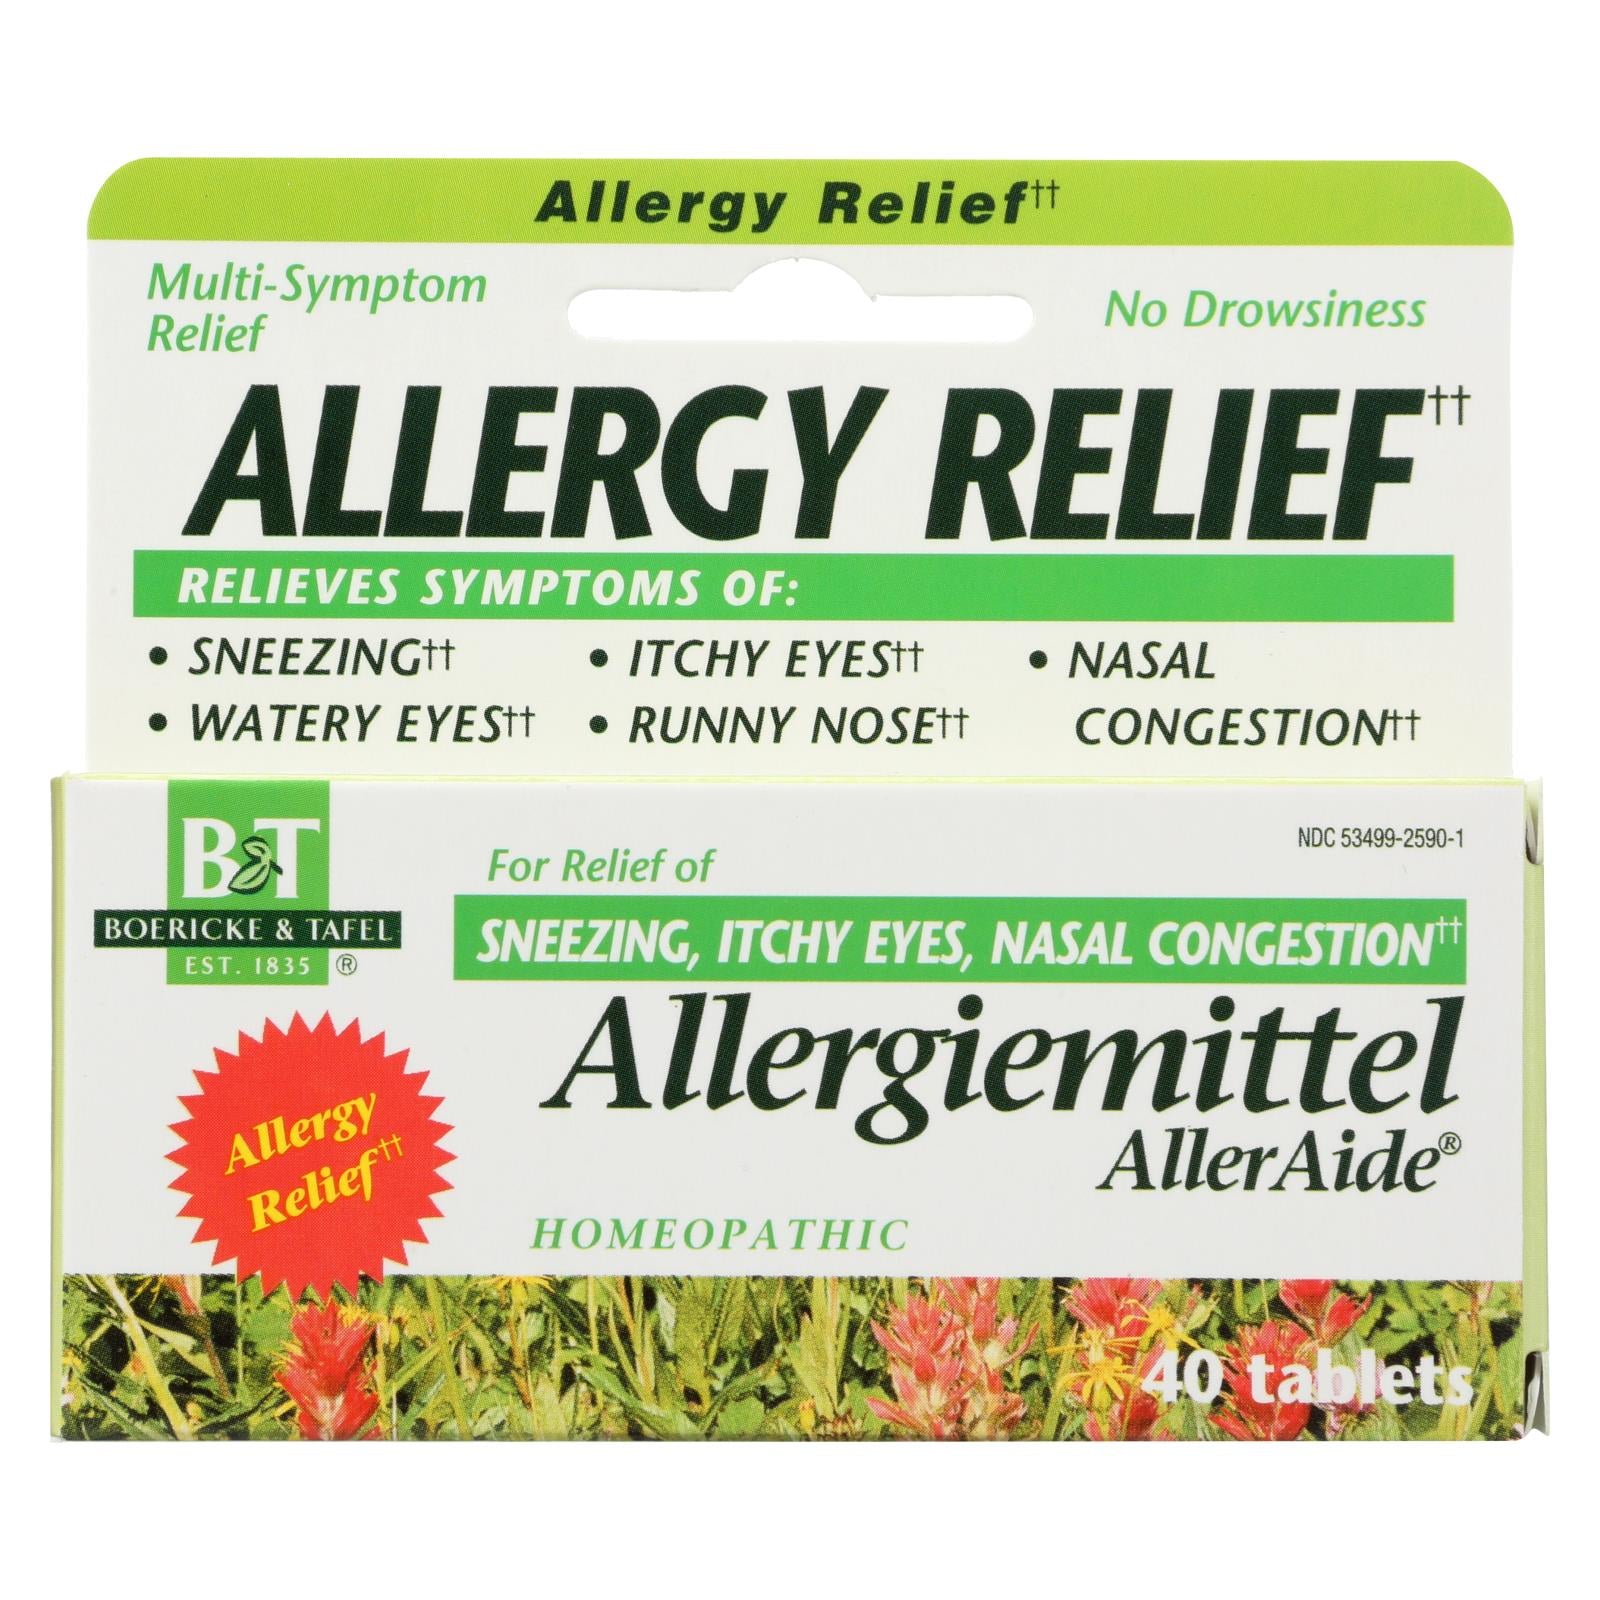 Boericke And Tafel - Allergiemittel Alleraide - 40 Tablets